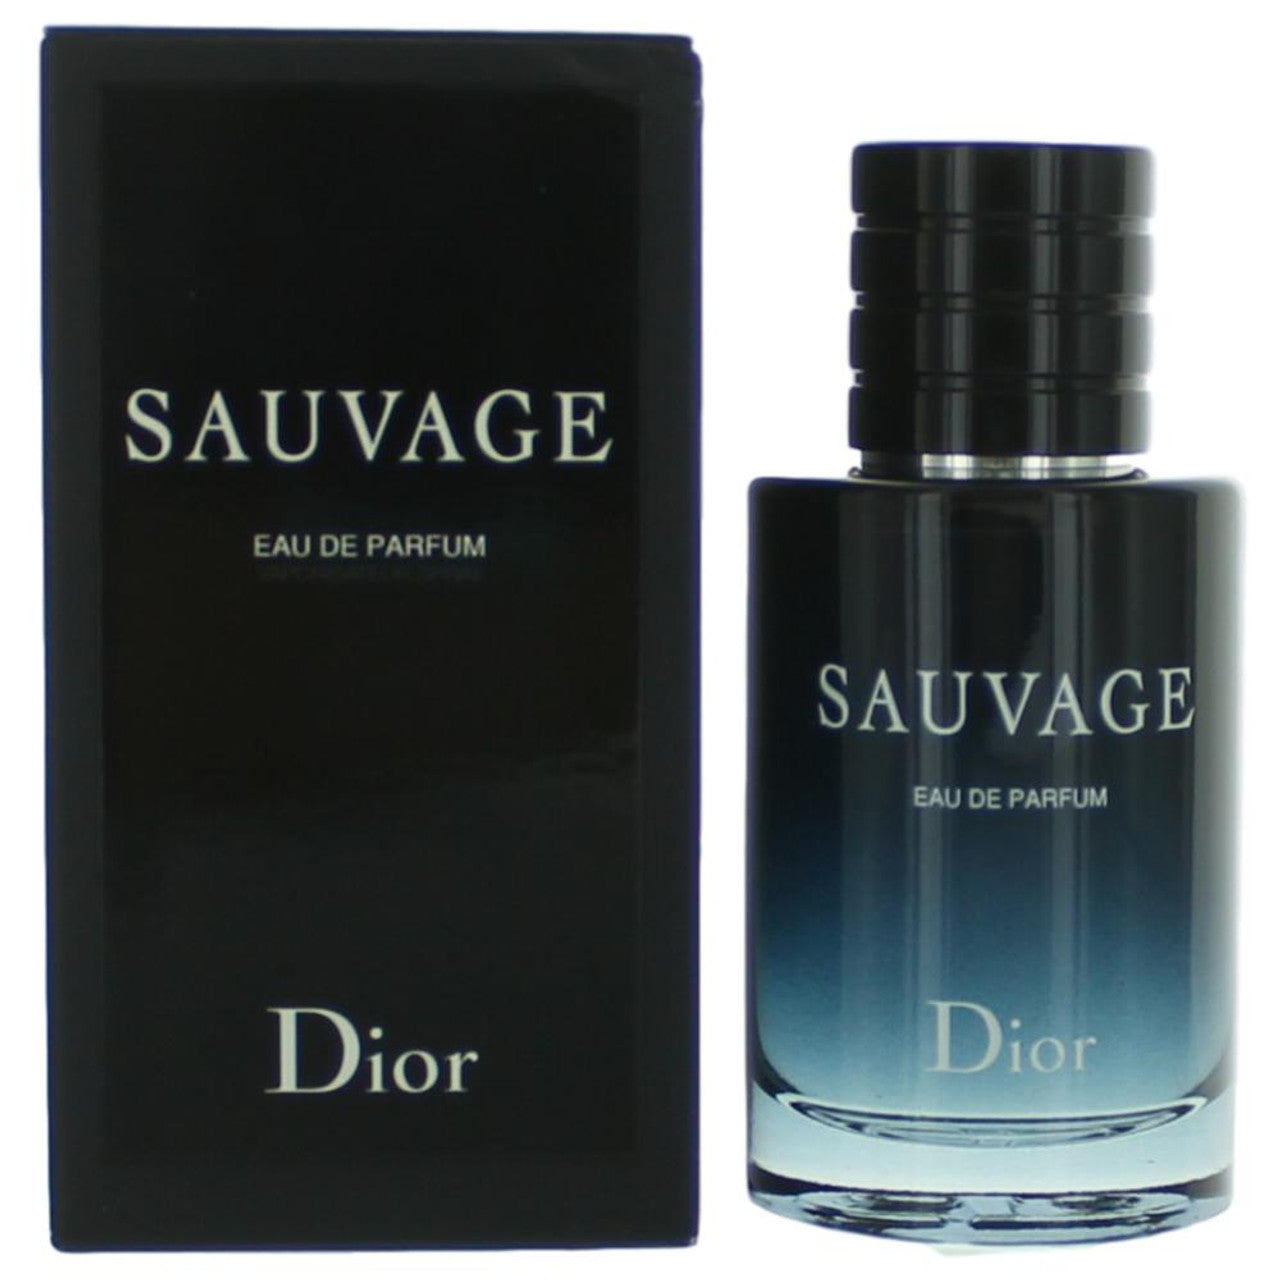 2 oz bottle of dior sauvage EDP cologne for men